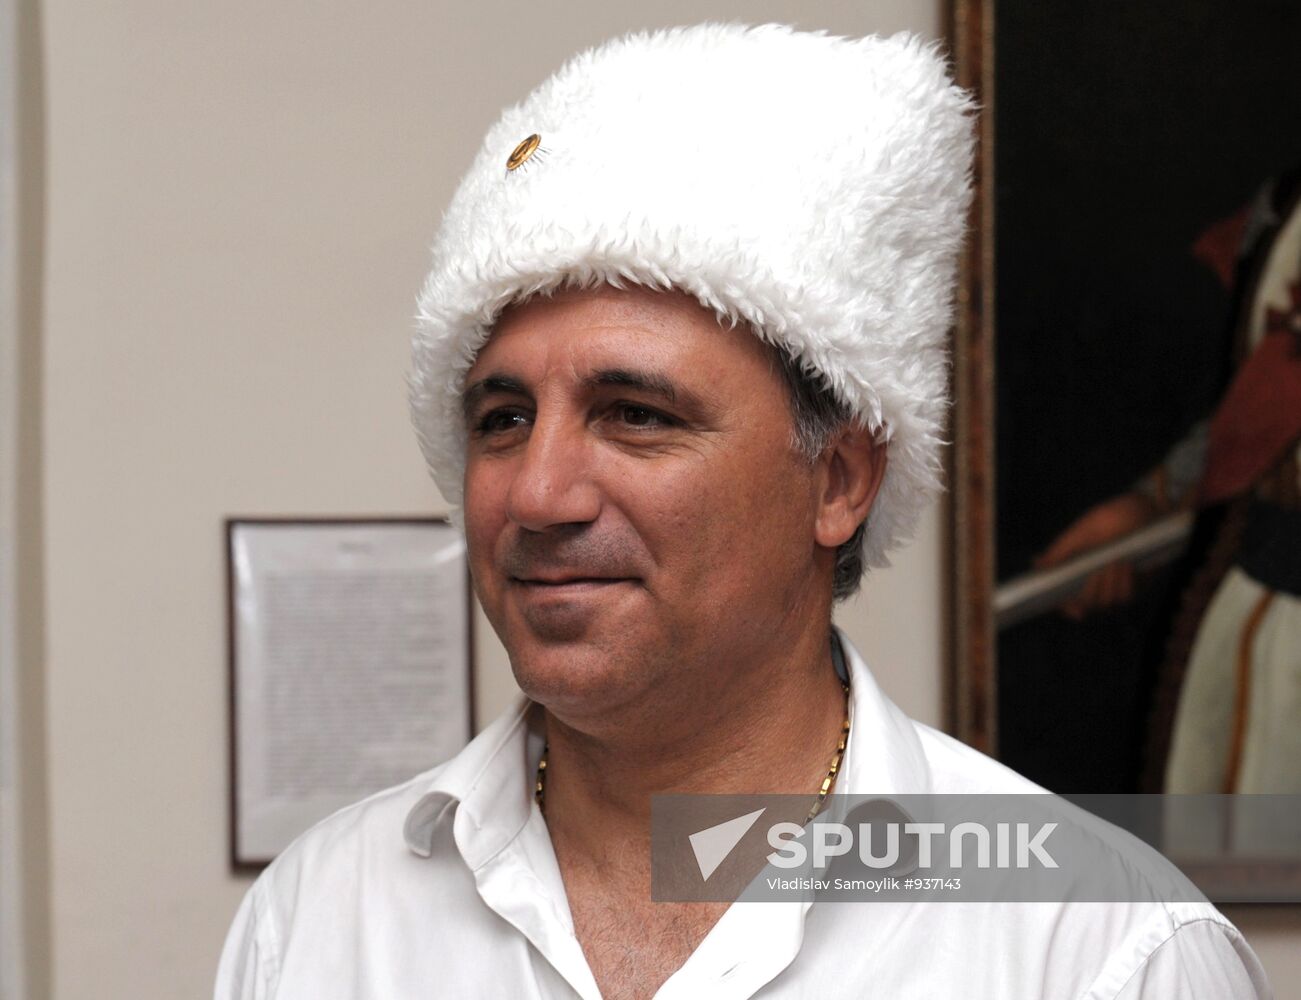 Bulgarian footballer Stoichkov inducted into Cossacks